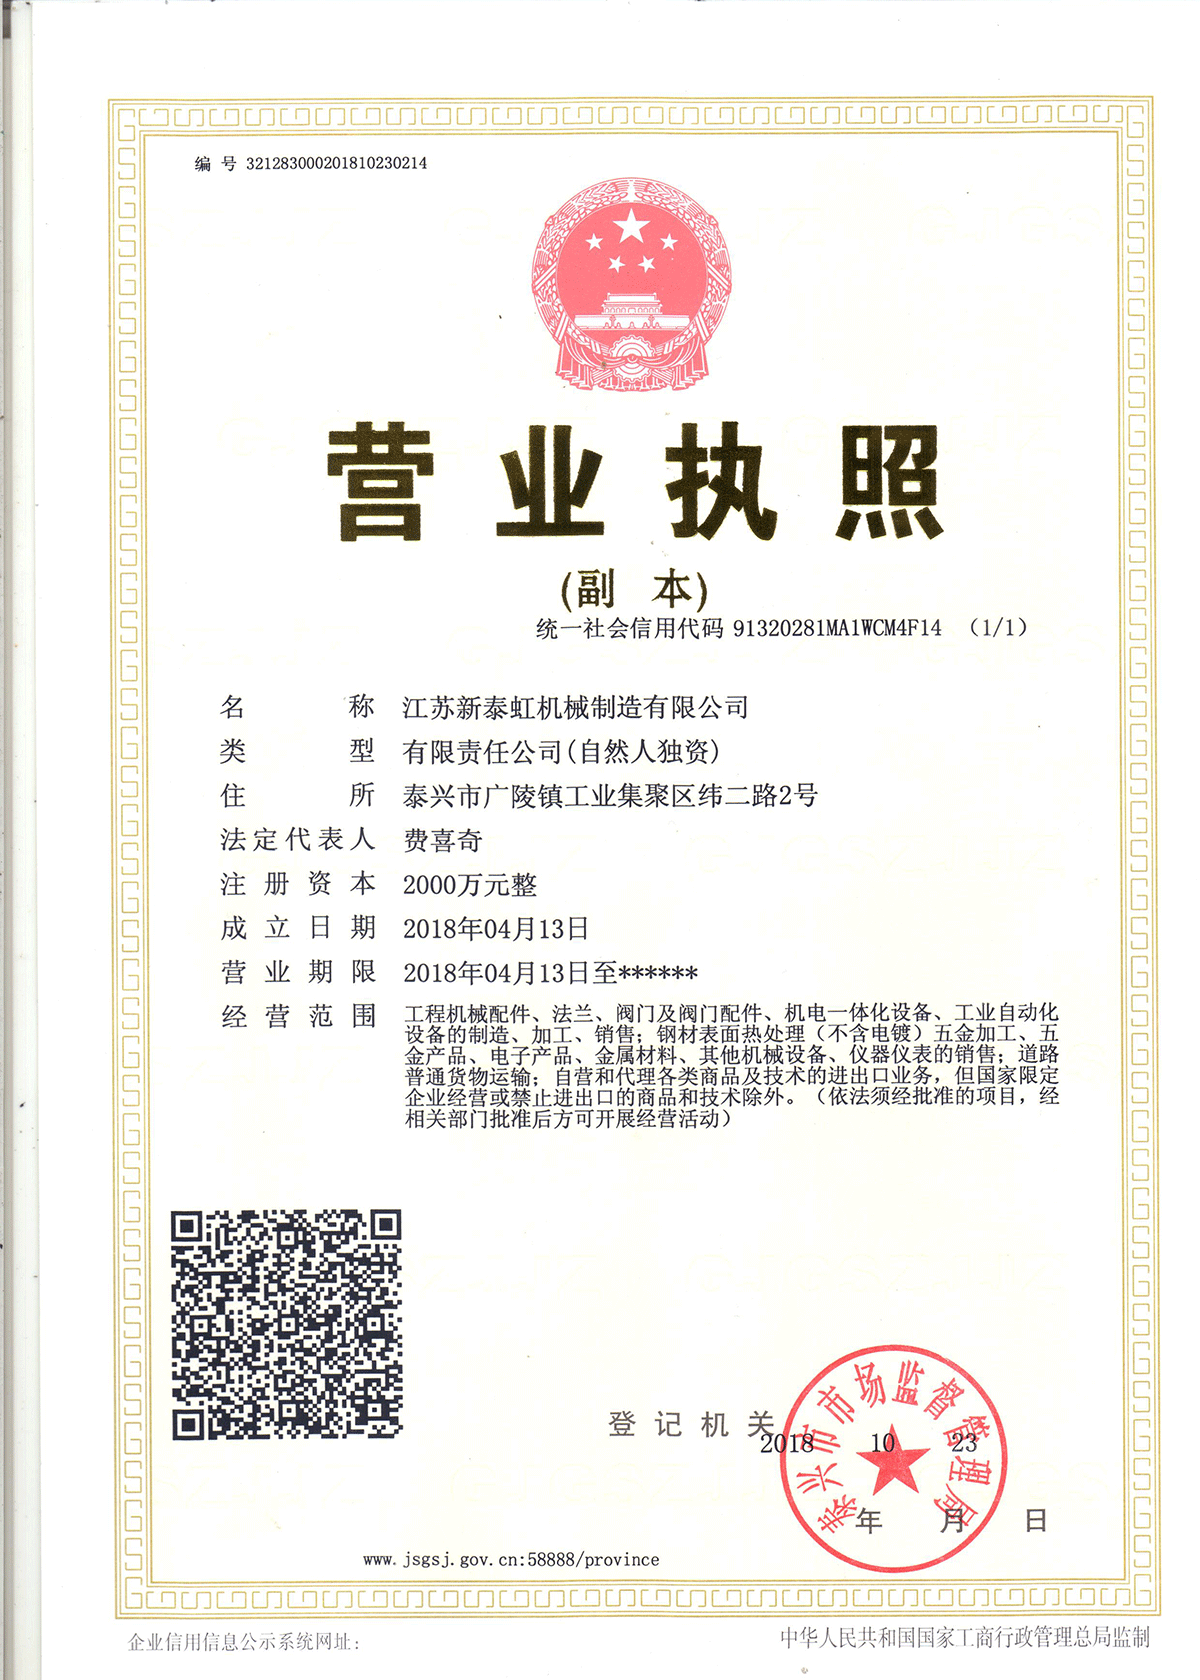 Jiangsu New TaiHO Machinery Manufacturing Co., Ltd.